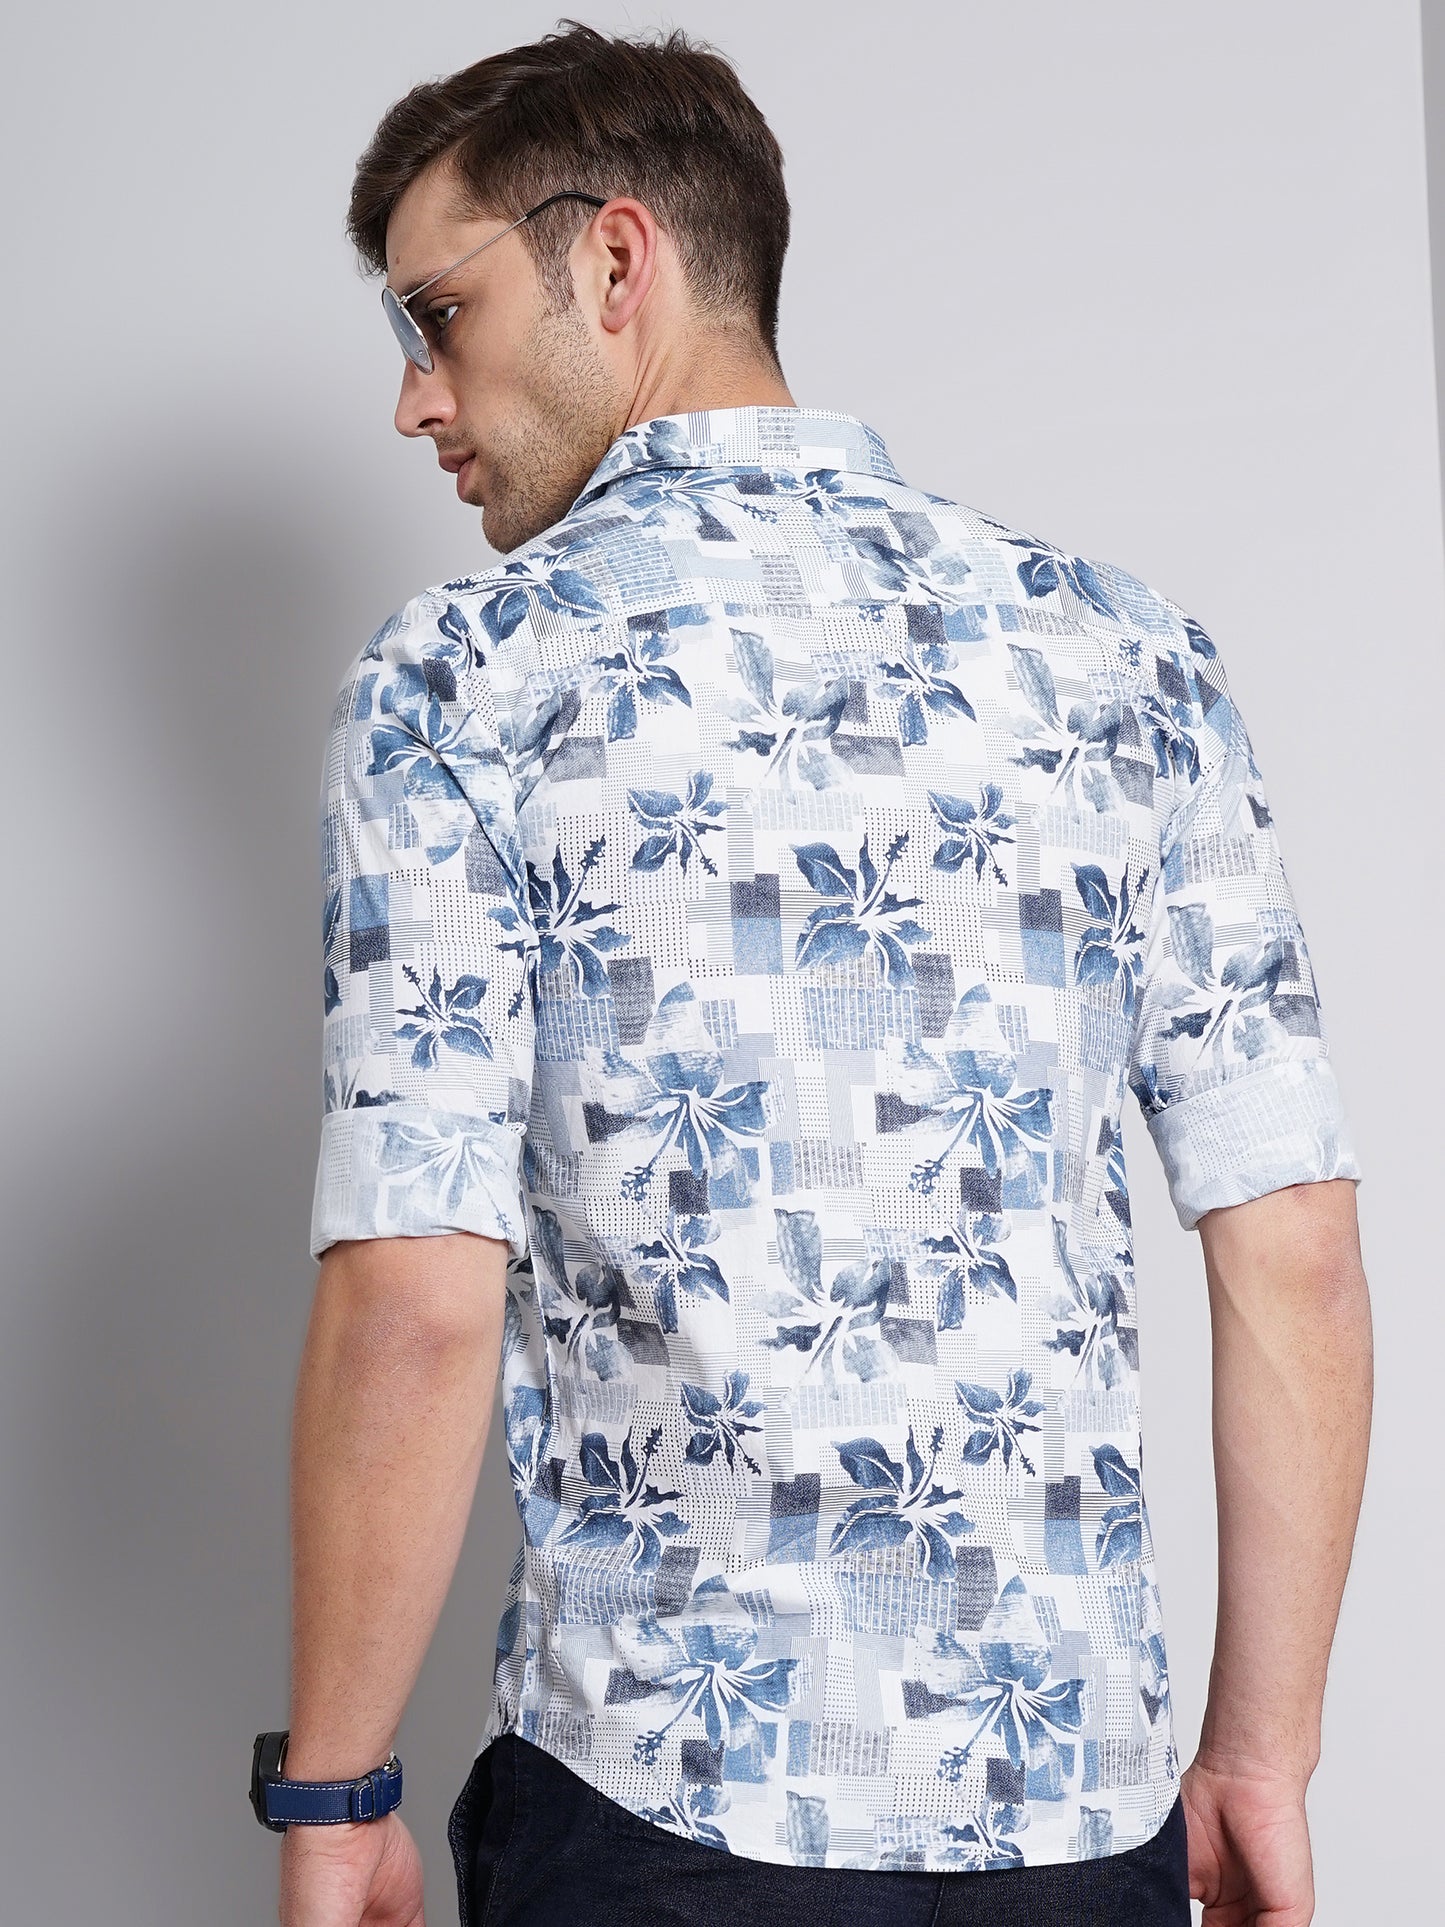 Floral Blue & White Printed Shirt for Men 